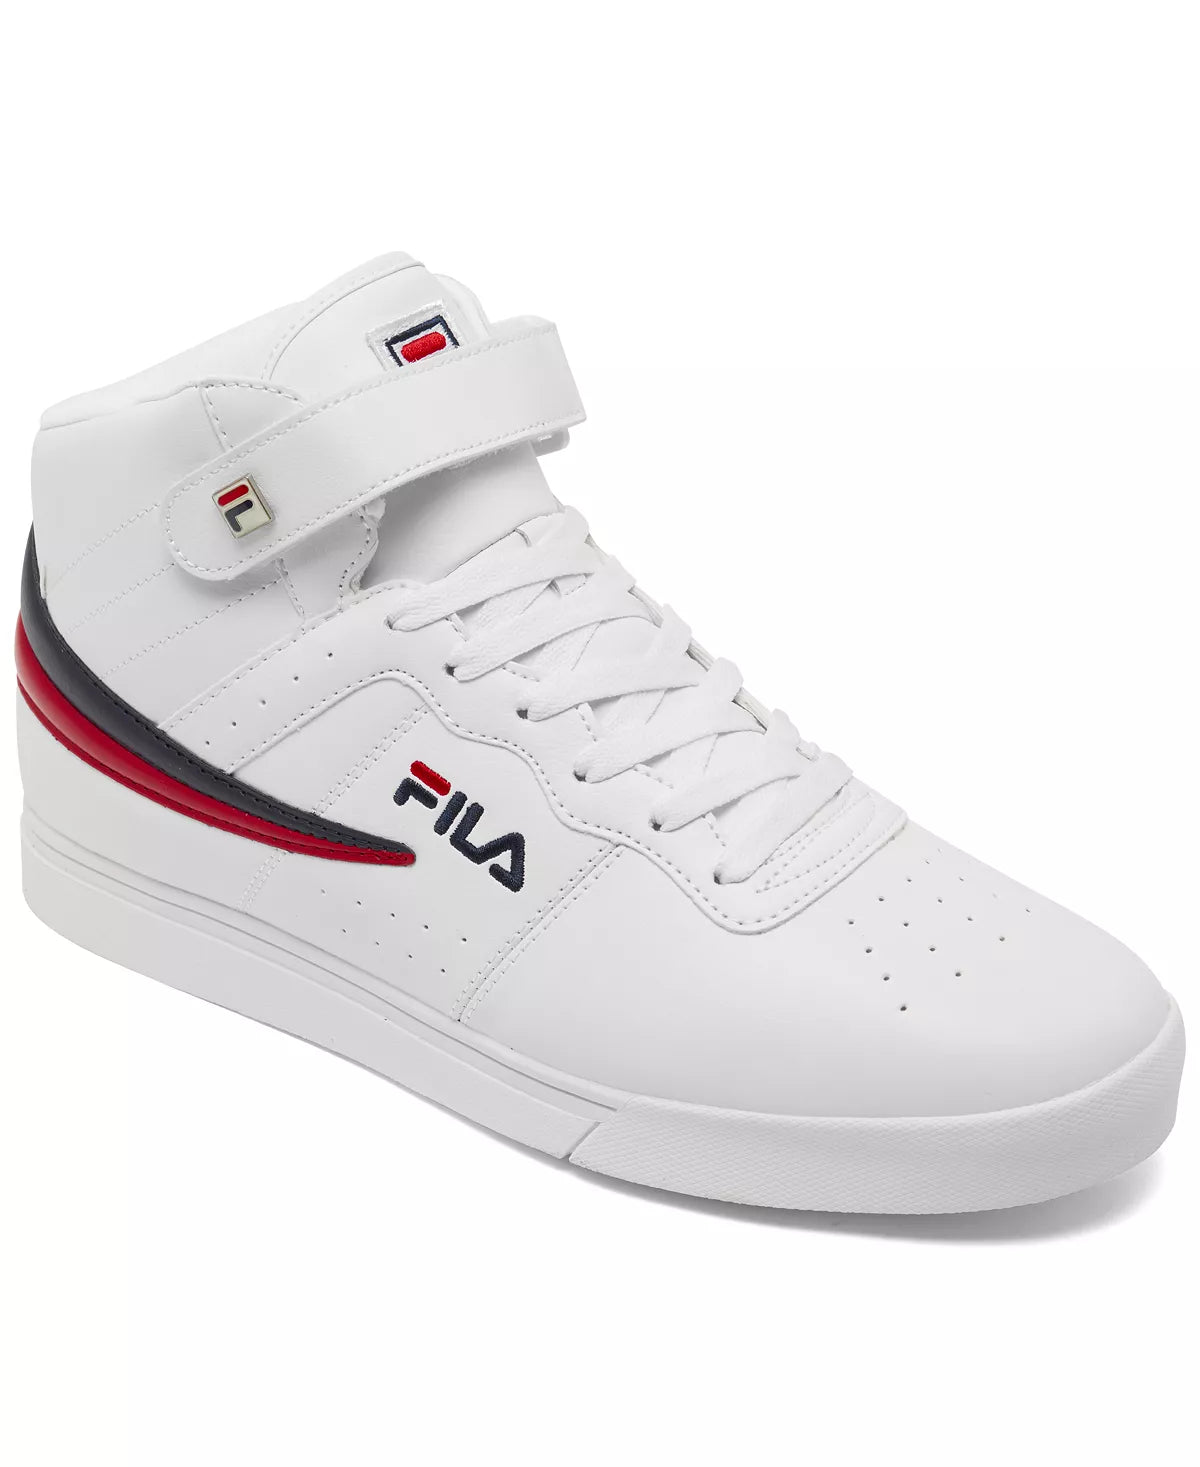 Mens Fila Squad Athletic Shoe - White / Navy / Red